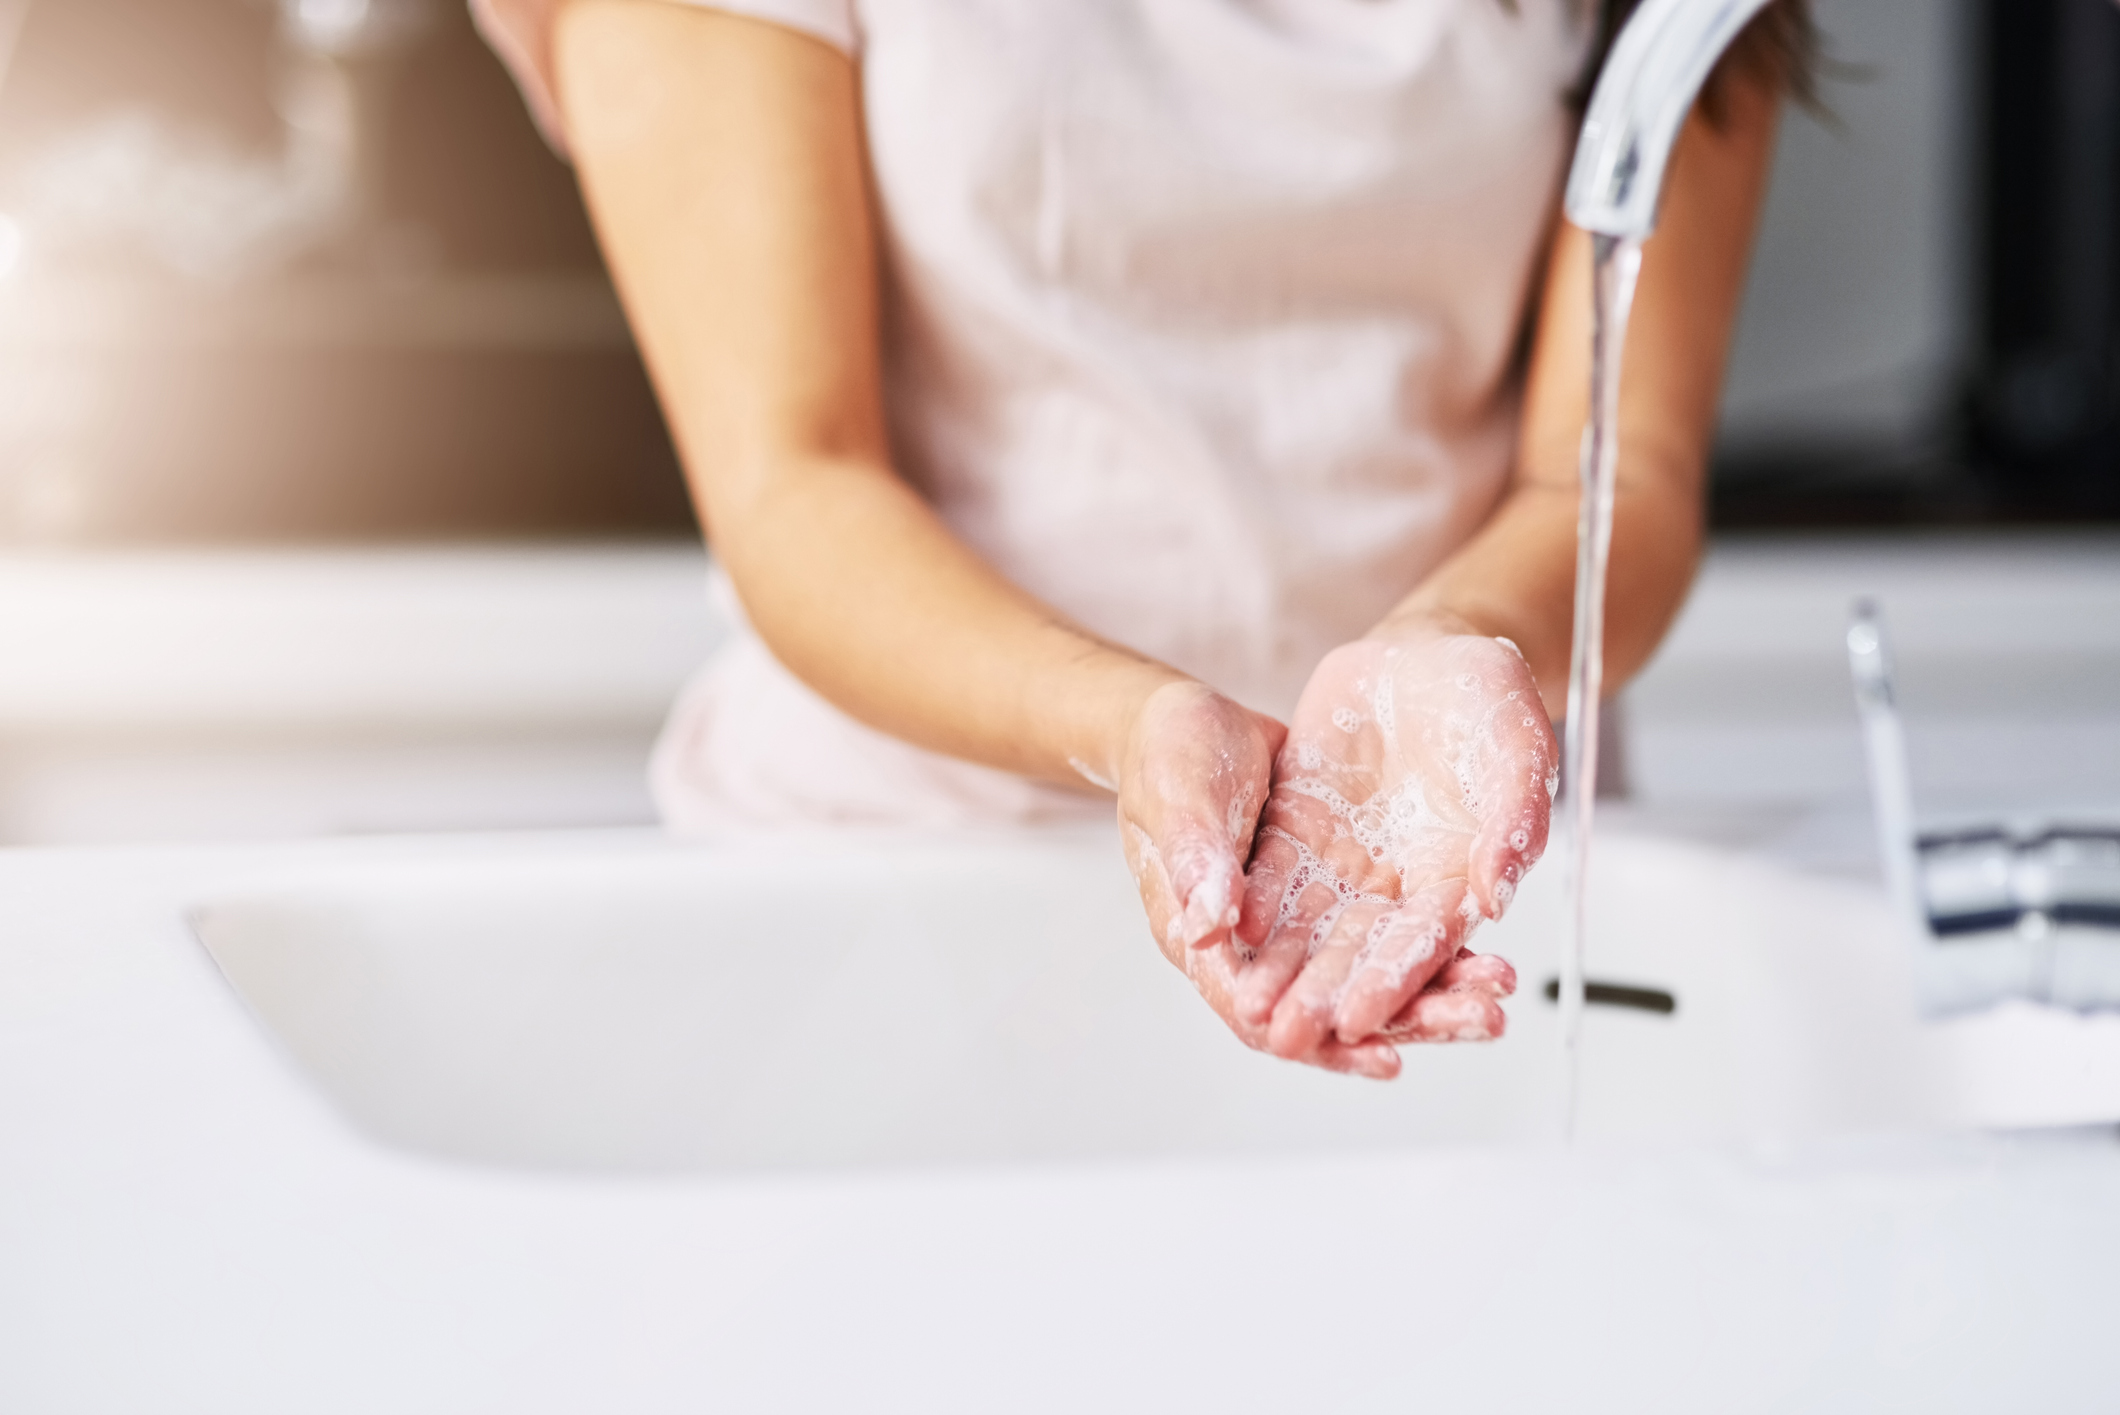 Closeup shot of an unrecognizable woman washing her hands